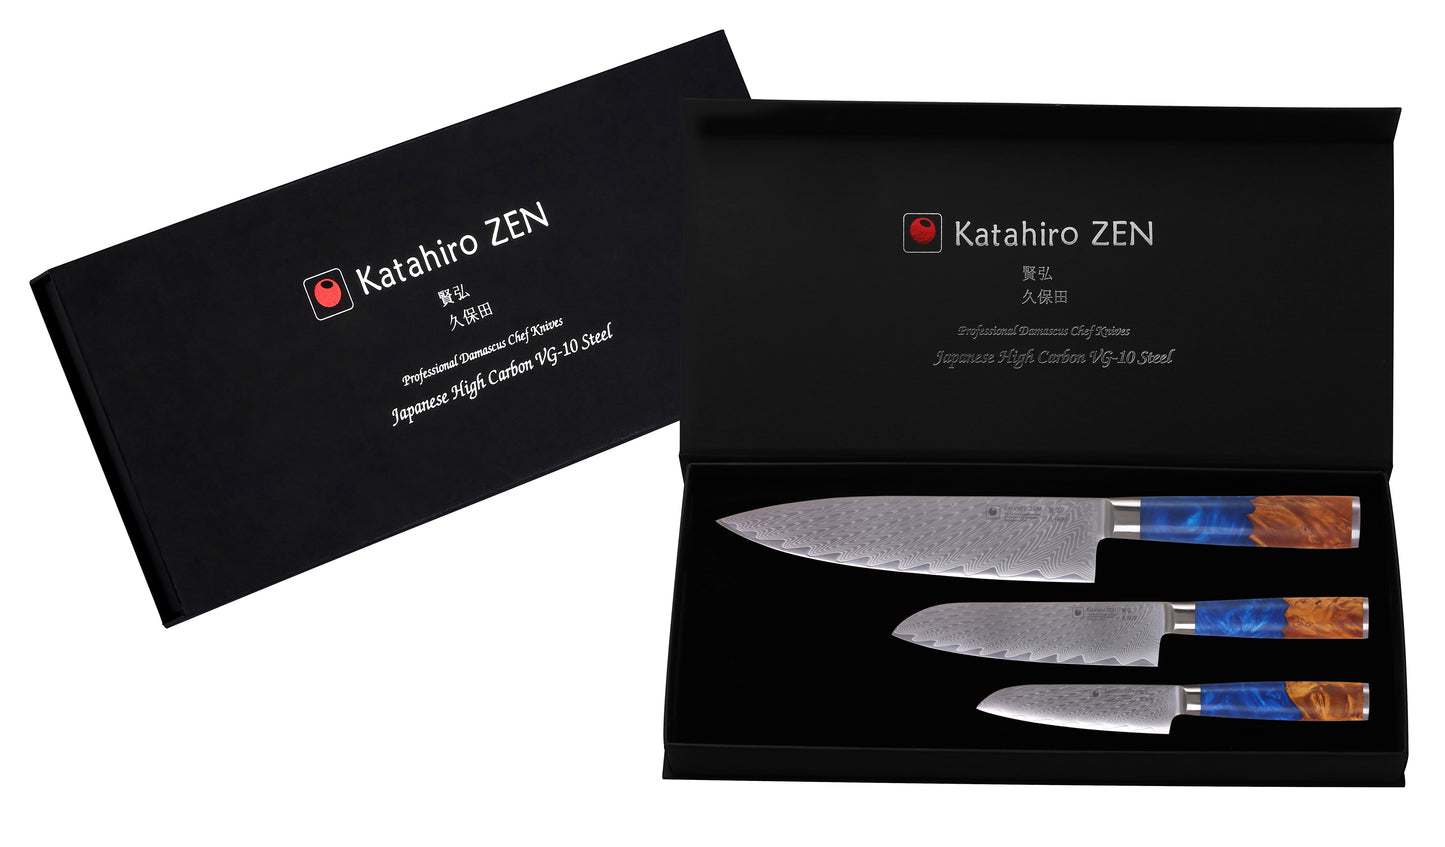 3-tlg. Katahiro Zen Damast Kochmesser-Set (8” Koch-, 7” Santoku-, 5” Santokumesser) Griff aus weißem Ahorn-Wurzelholz und blauem Acrylharz